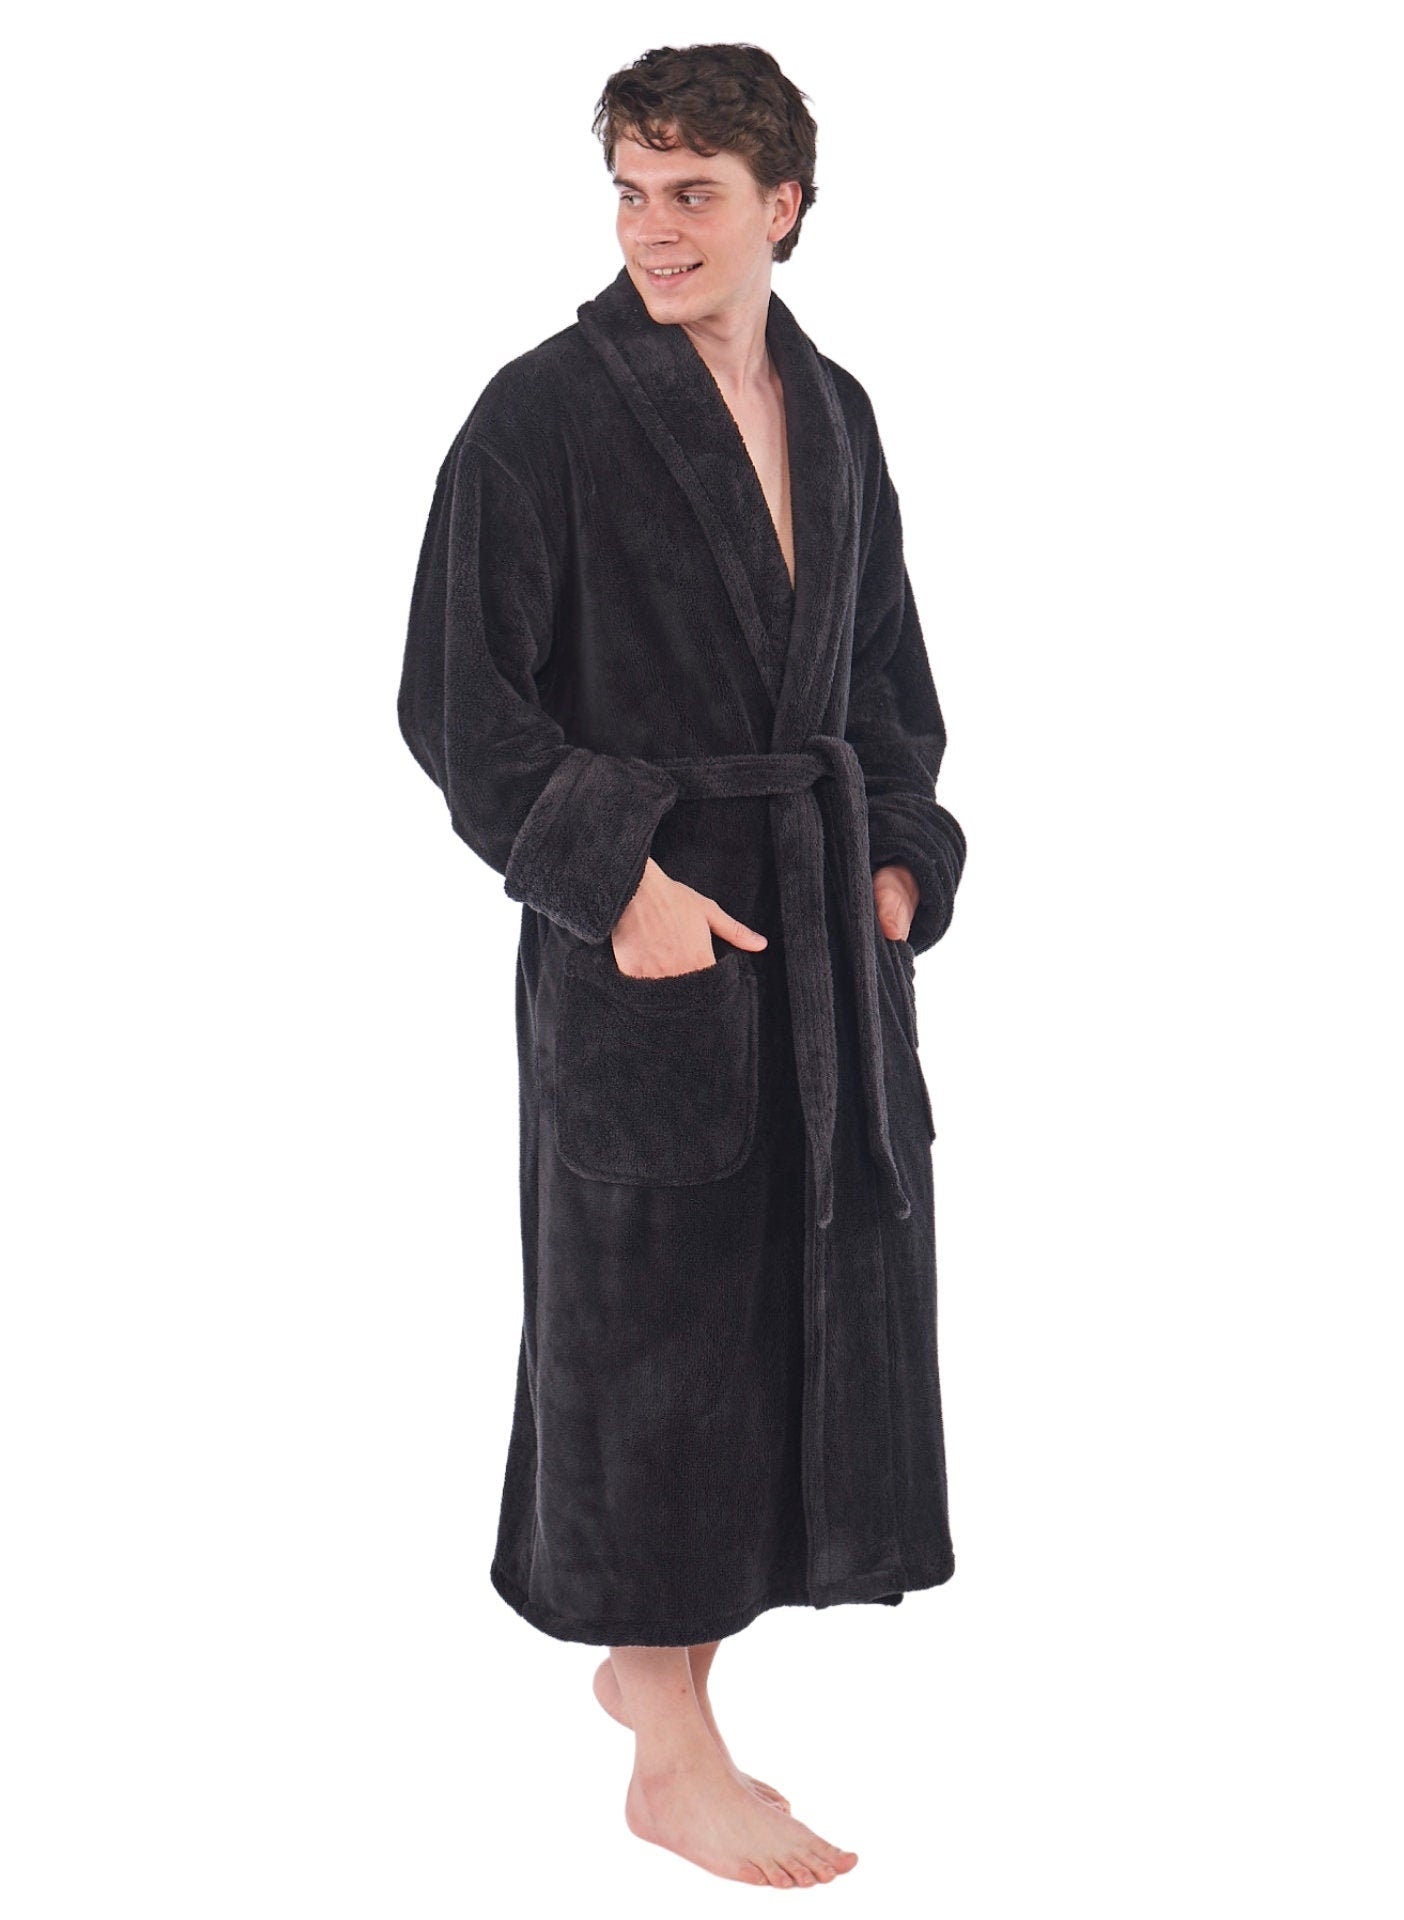 Men's Robe, Gift for Him, Personalized, Fleece Plush, Soft and Warm Shawl Robe, Made in Turkey, Monogrammed, Custom Wedding, Birthday Gift